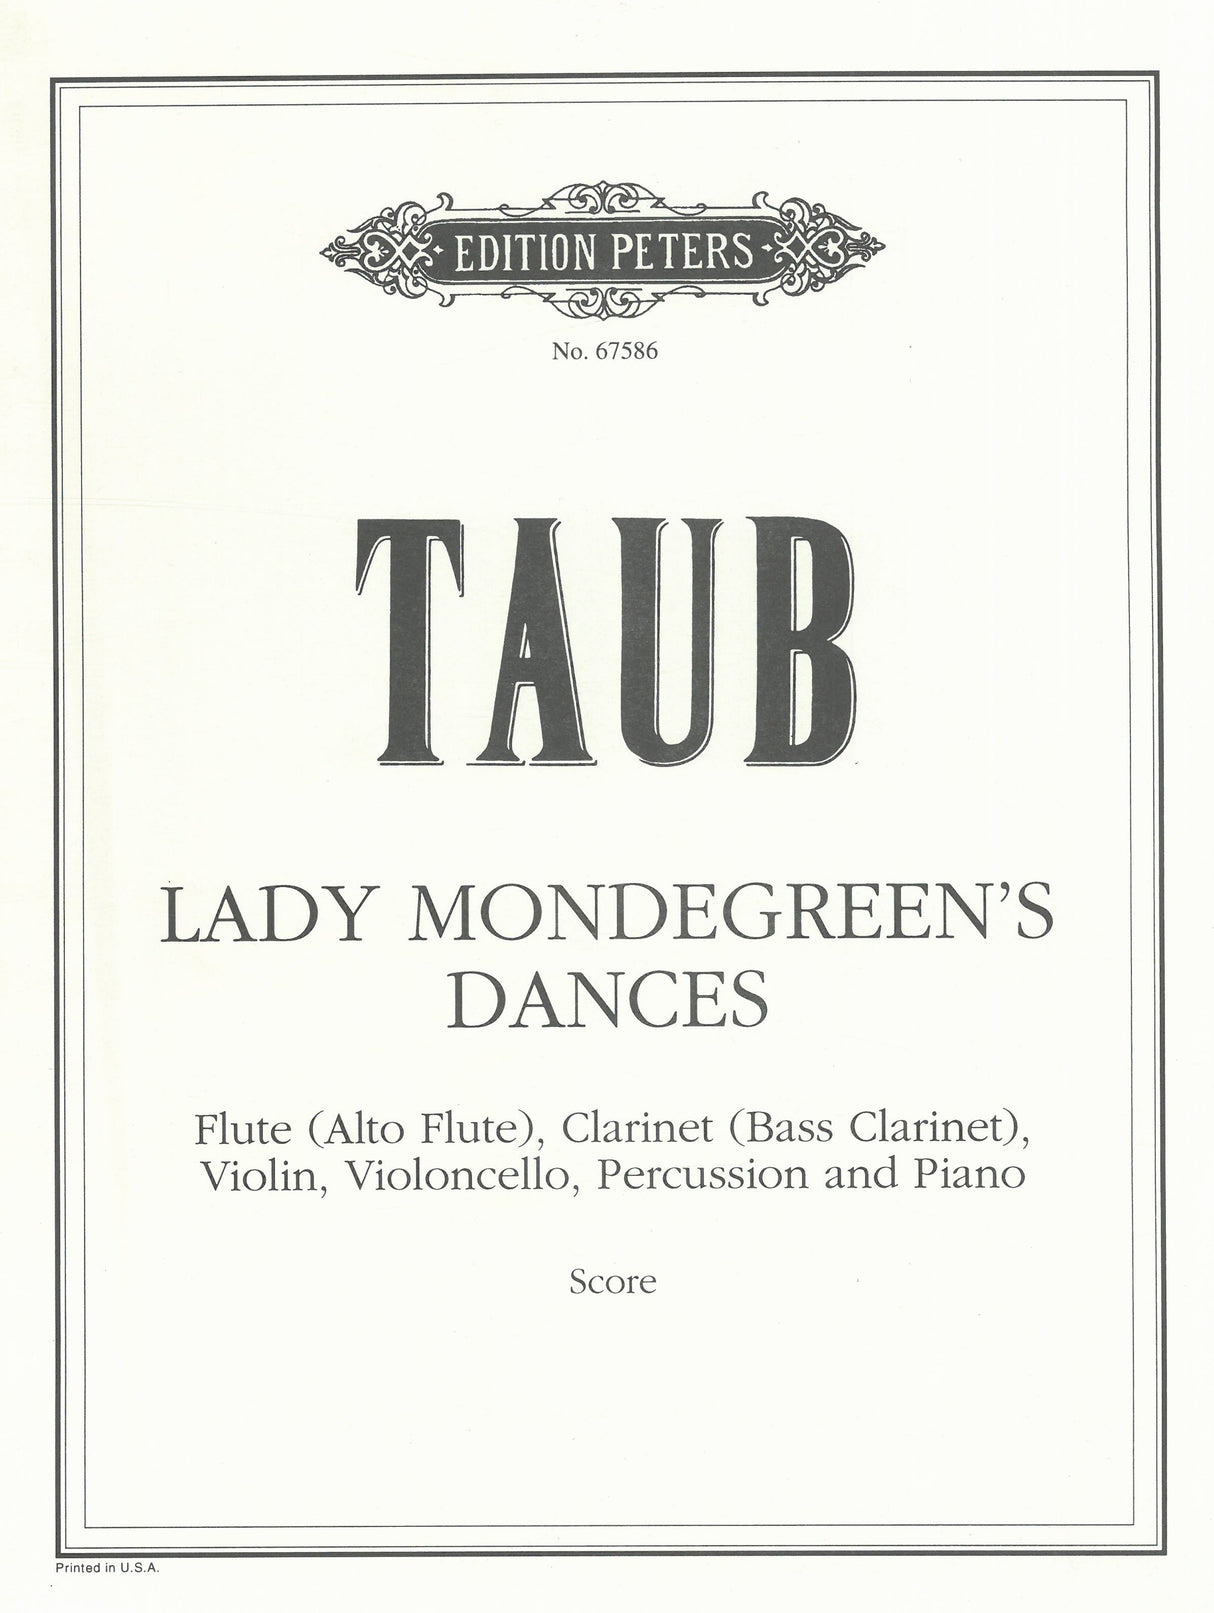 Taub: Lady Mondegreen's Dances